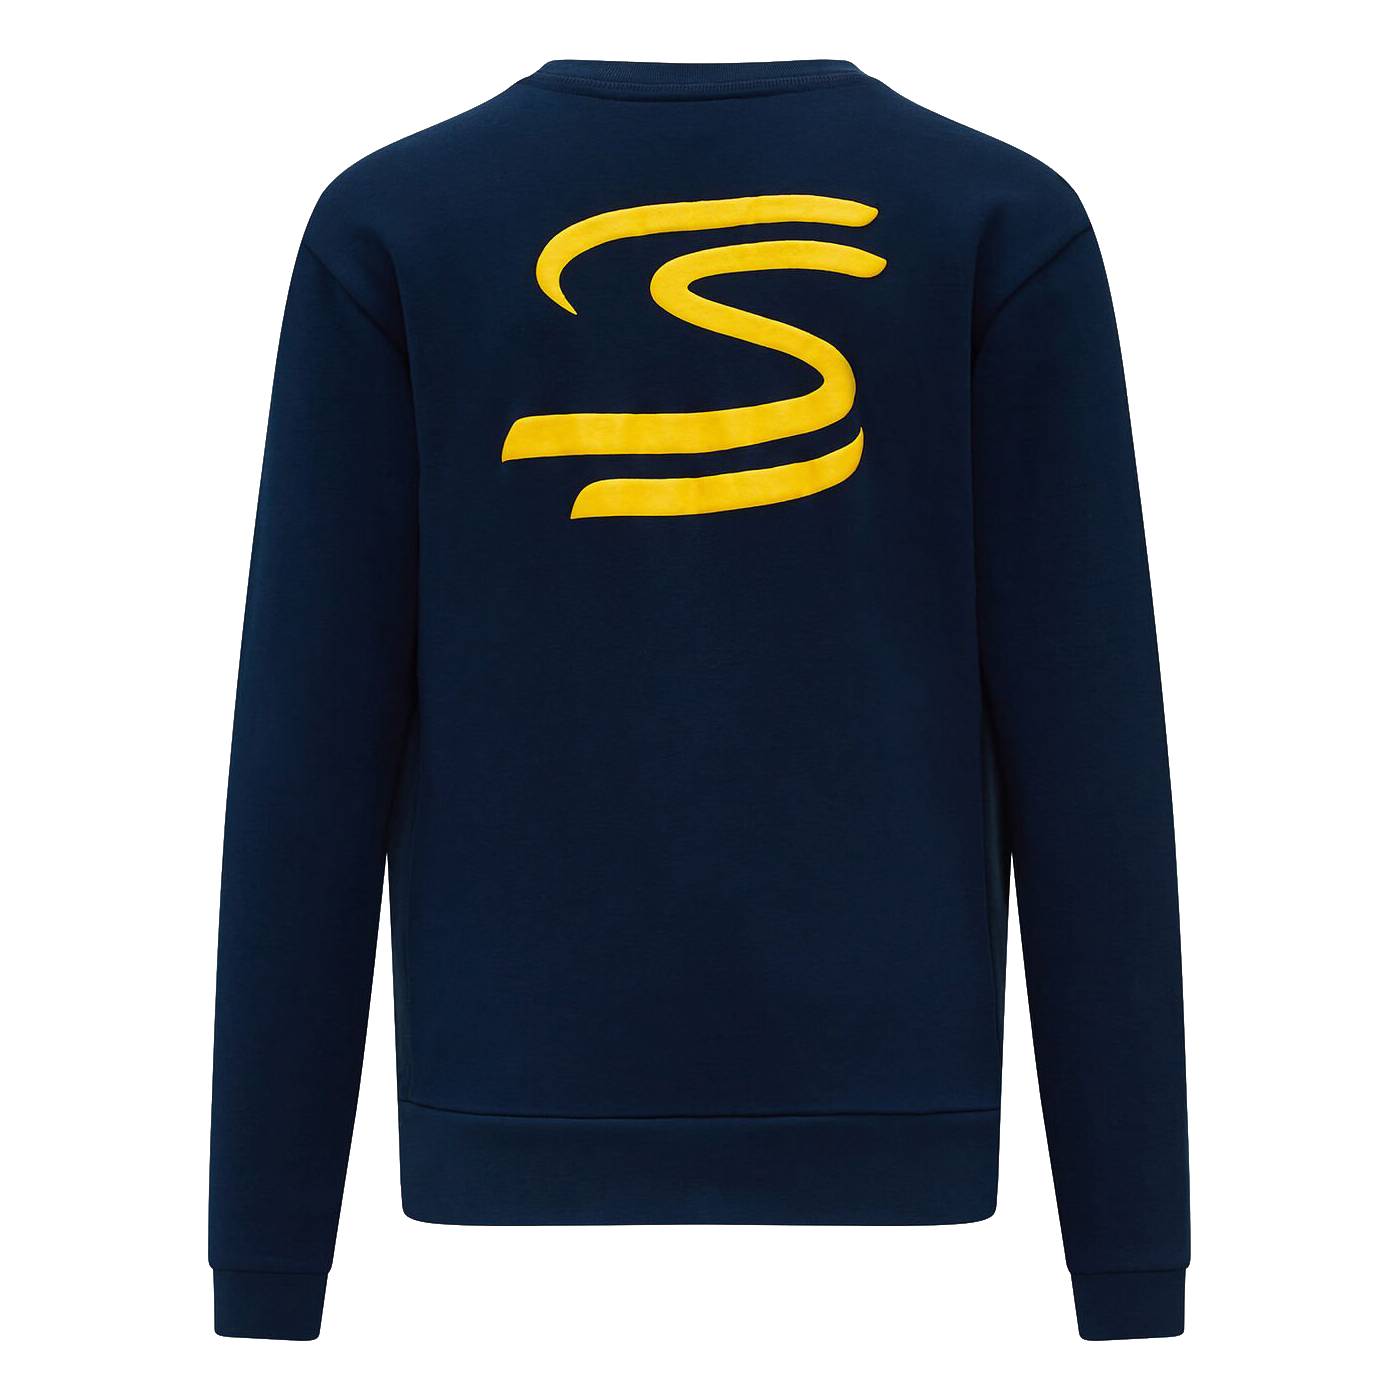 Ayrton Senna Sweatshirt "Doppel S" - blau